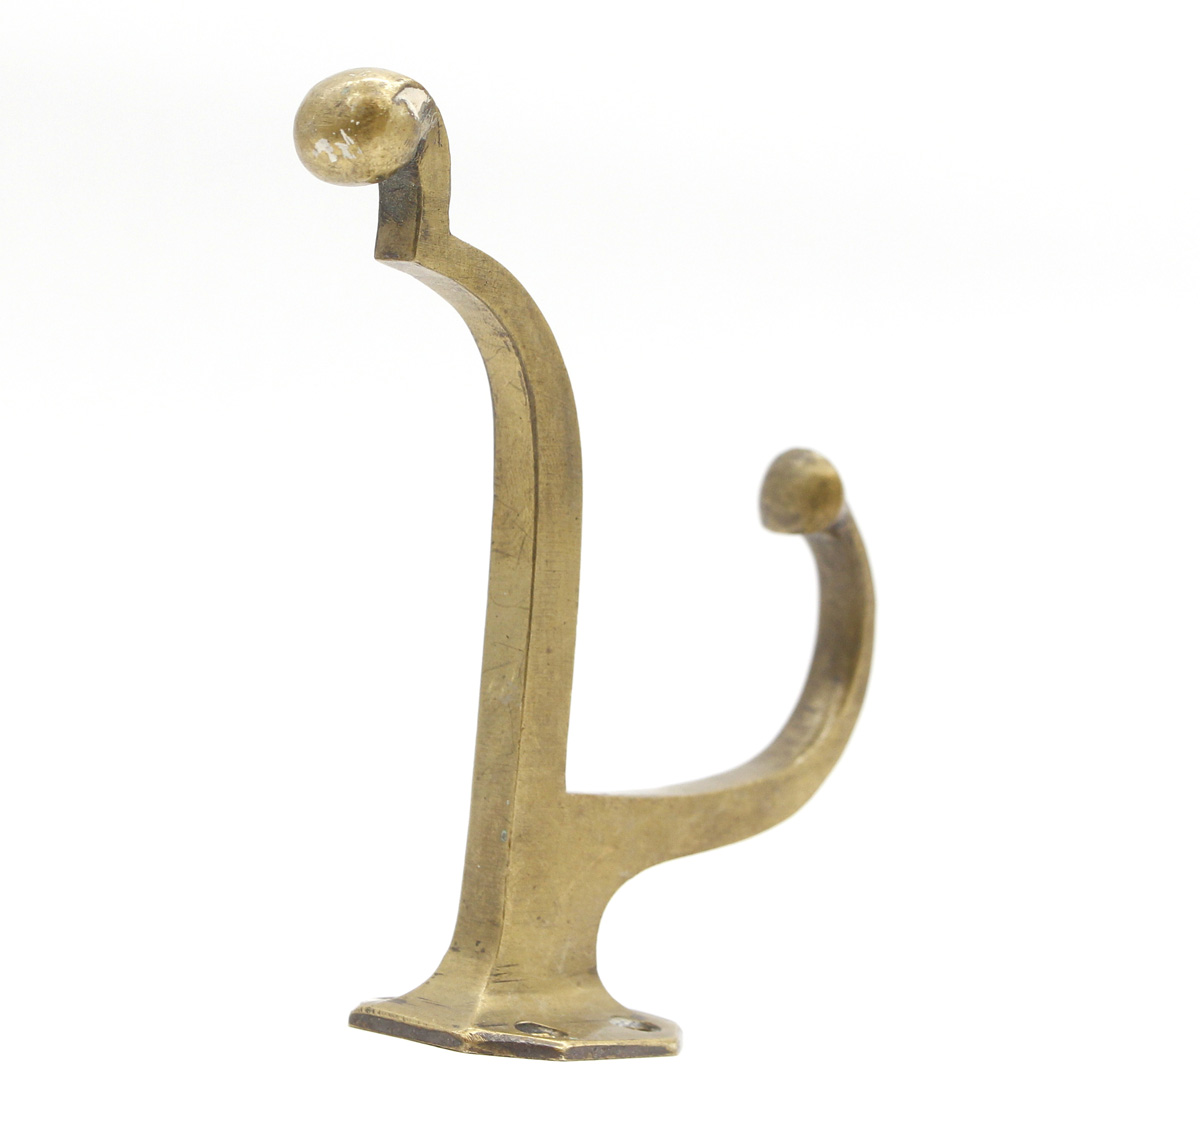 Vintage European Double Arm Brass Wall Hook